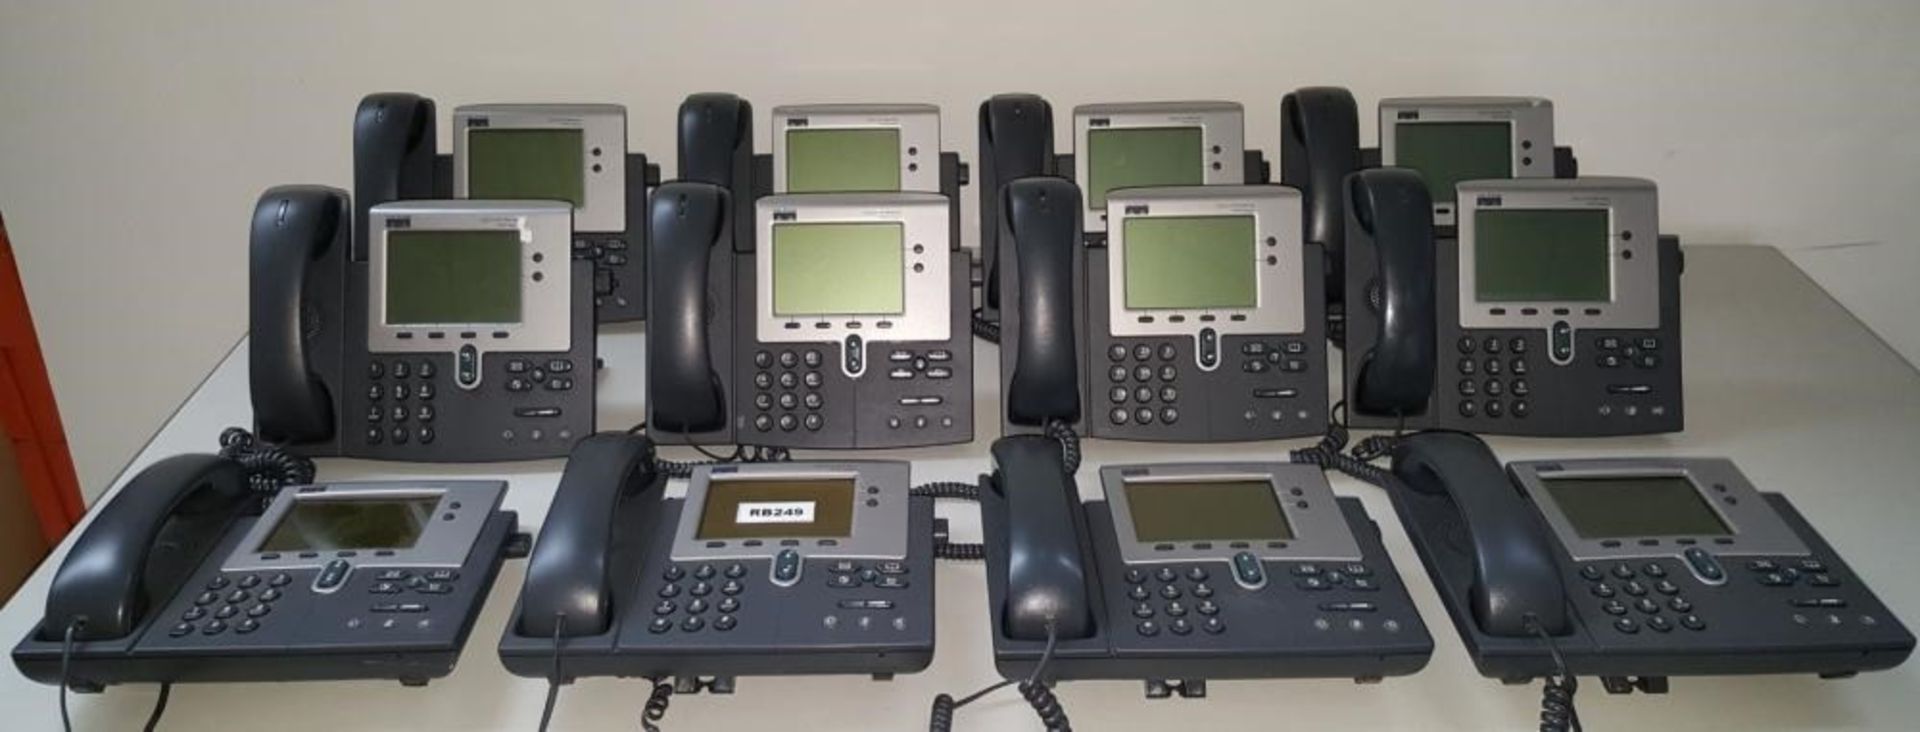 12 x Cisco 7940 IP System Office Telephone - Ref RB249 J2 - CL011 - Location: Altrincham WA14As